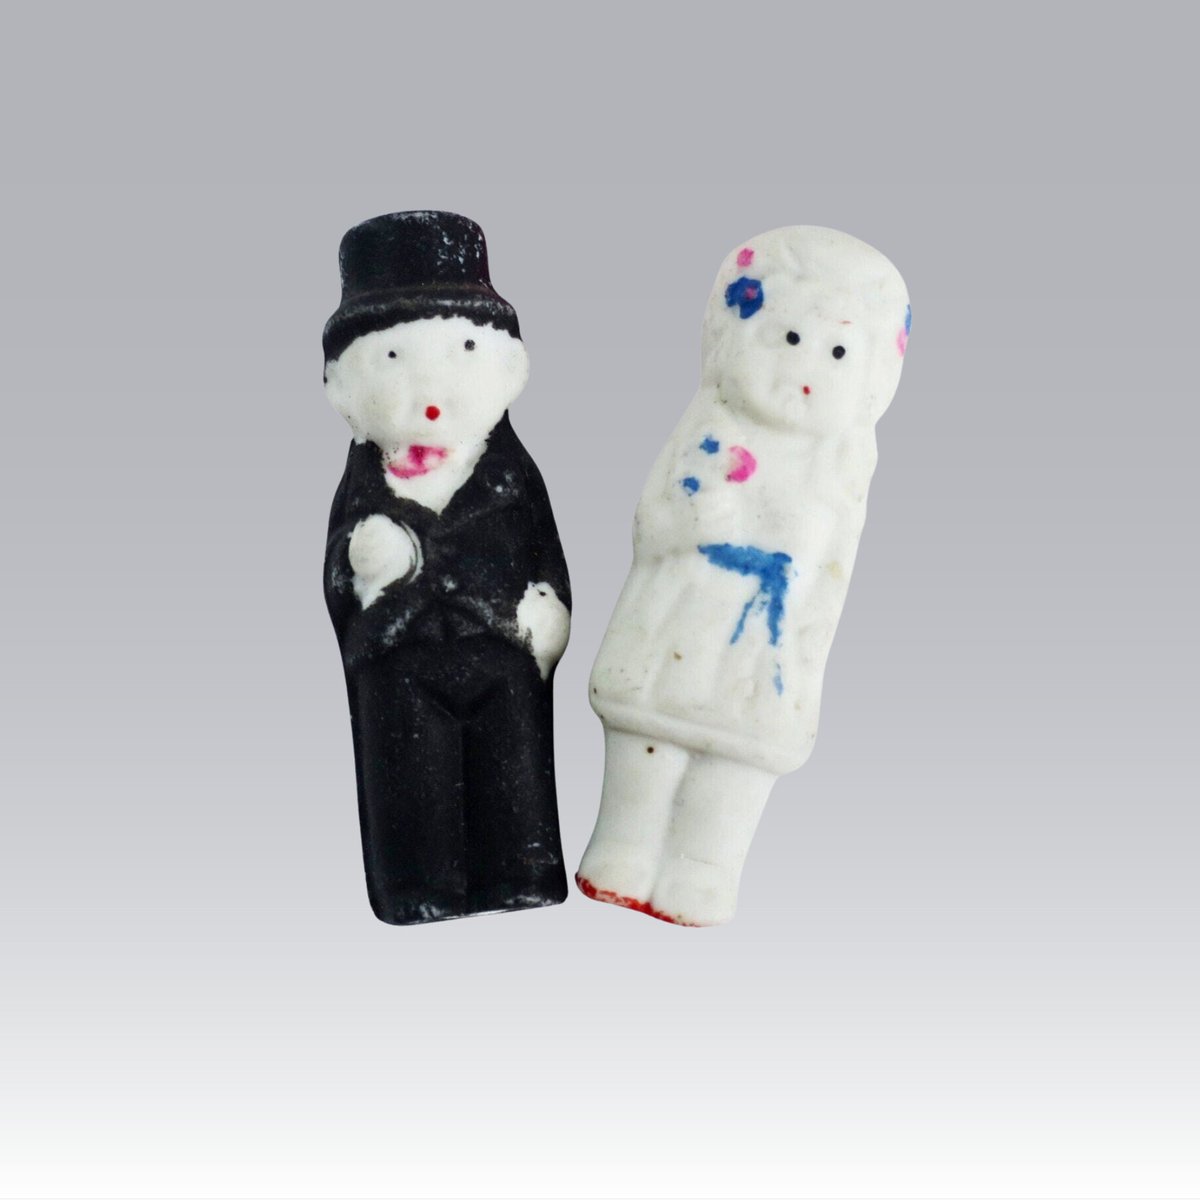 Antique 1930s Mini Bisque Bride and Groom Dolls, Frozen Charlotte Couple made in Japan, #2 tuppu.net/c928182b #Dad2024 #Vintage4Sale #EtsyteamUnity #SMILEtt23